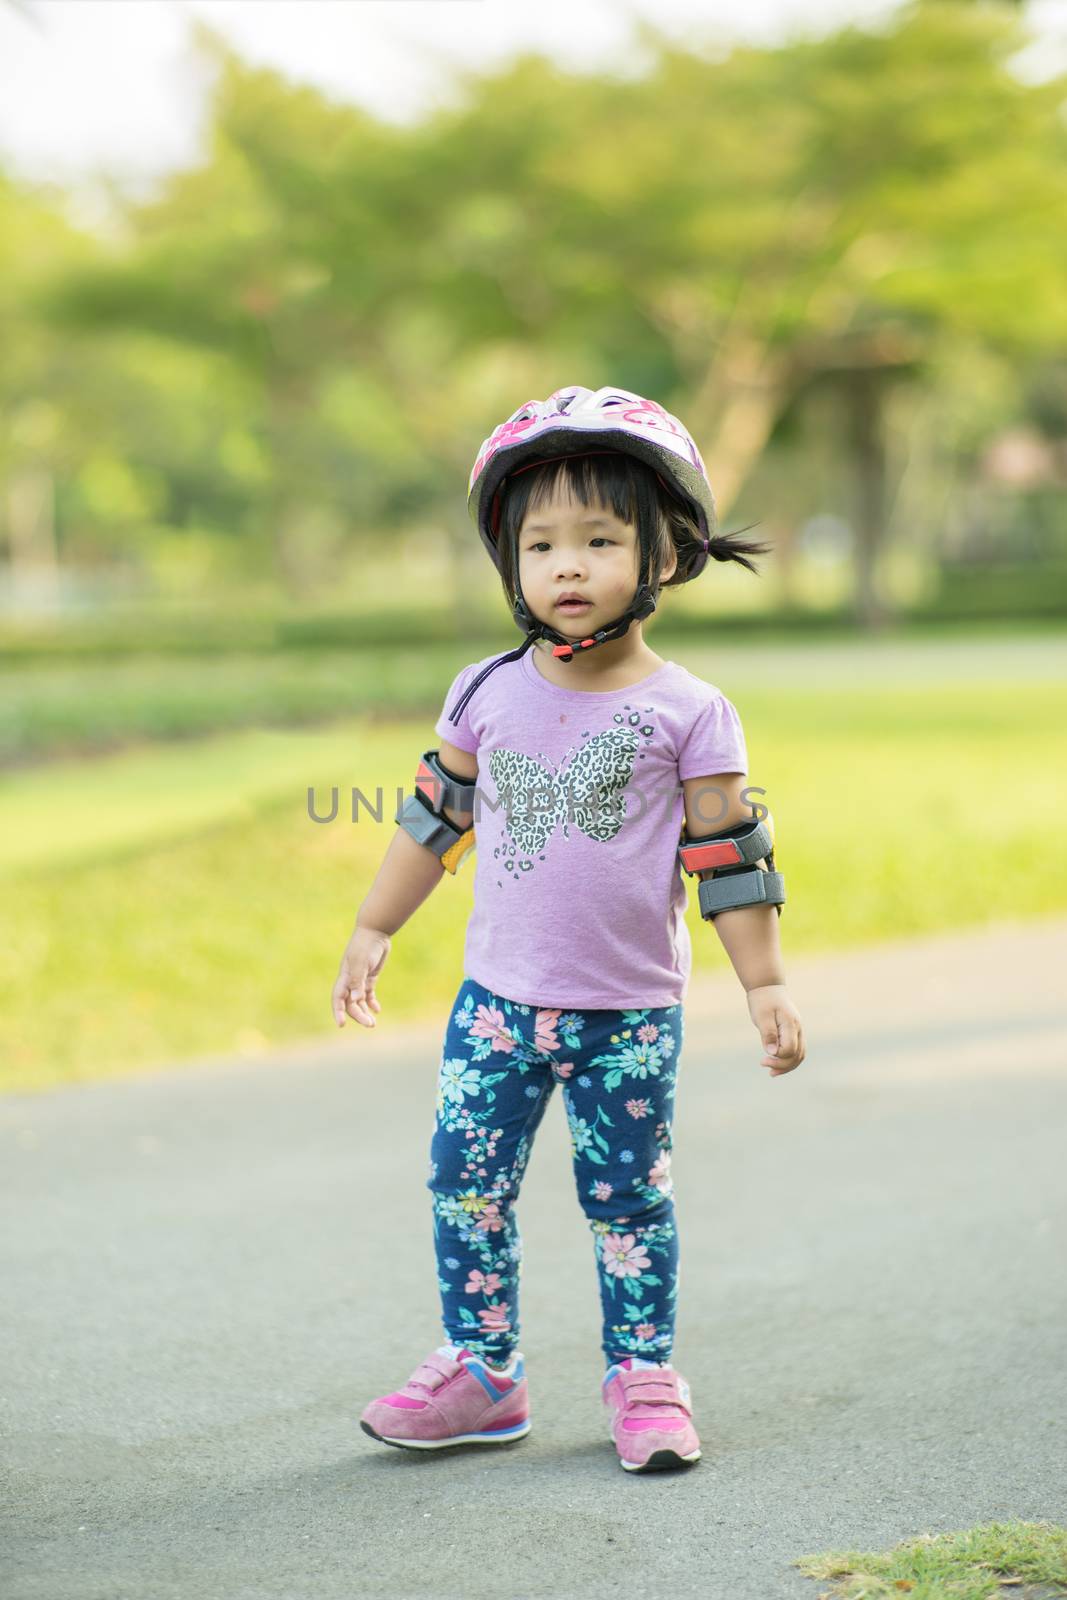 Little girl in cycling wear ready to learn riding balance bike i by domonite